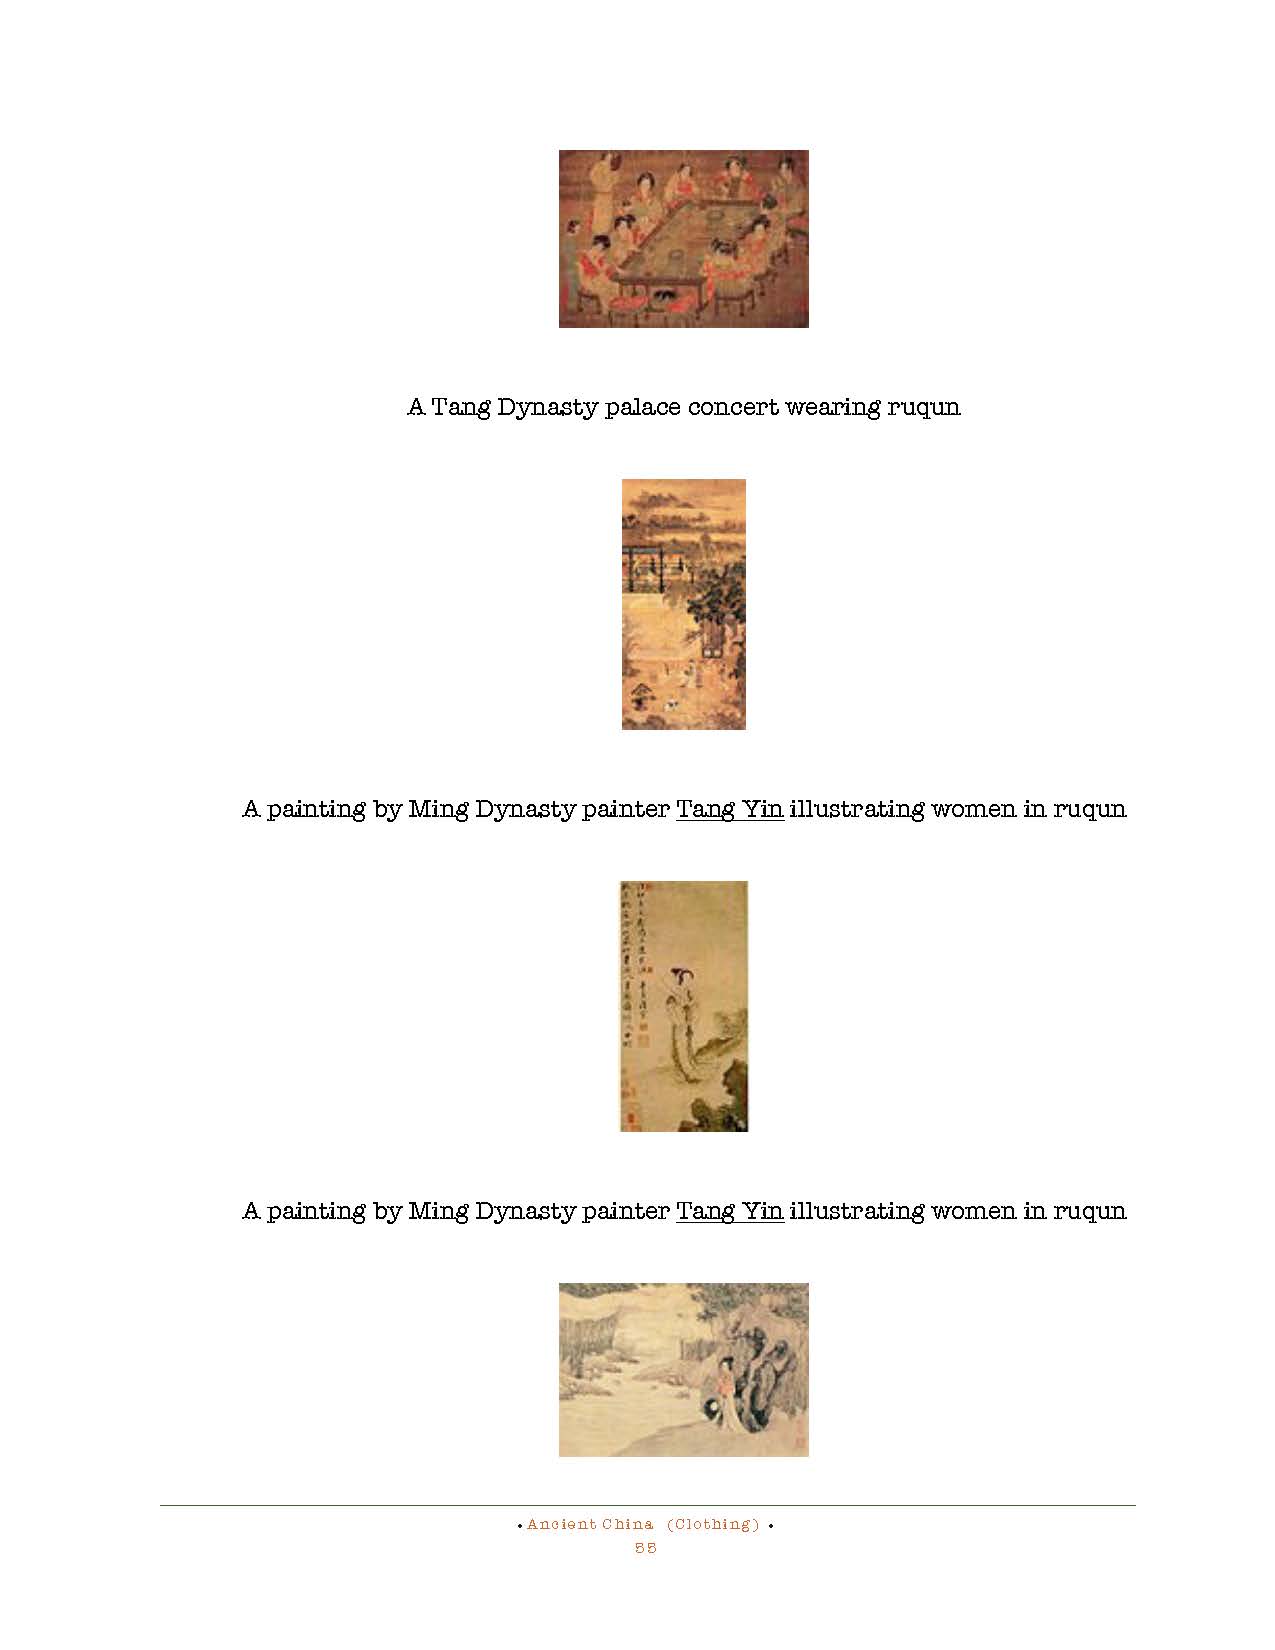 HOCE- Ancient China Notes (clothing)_Page_55.jpg